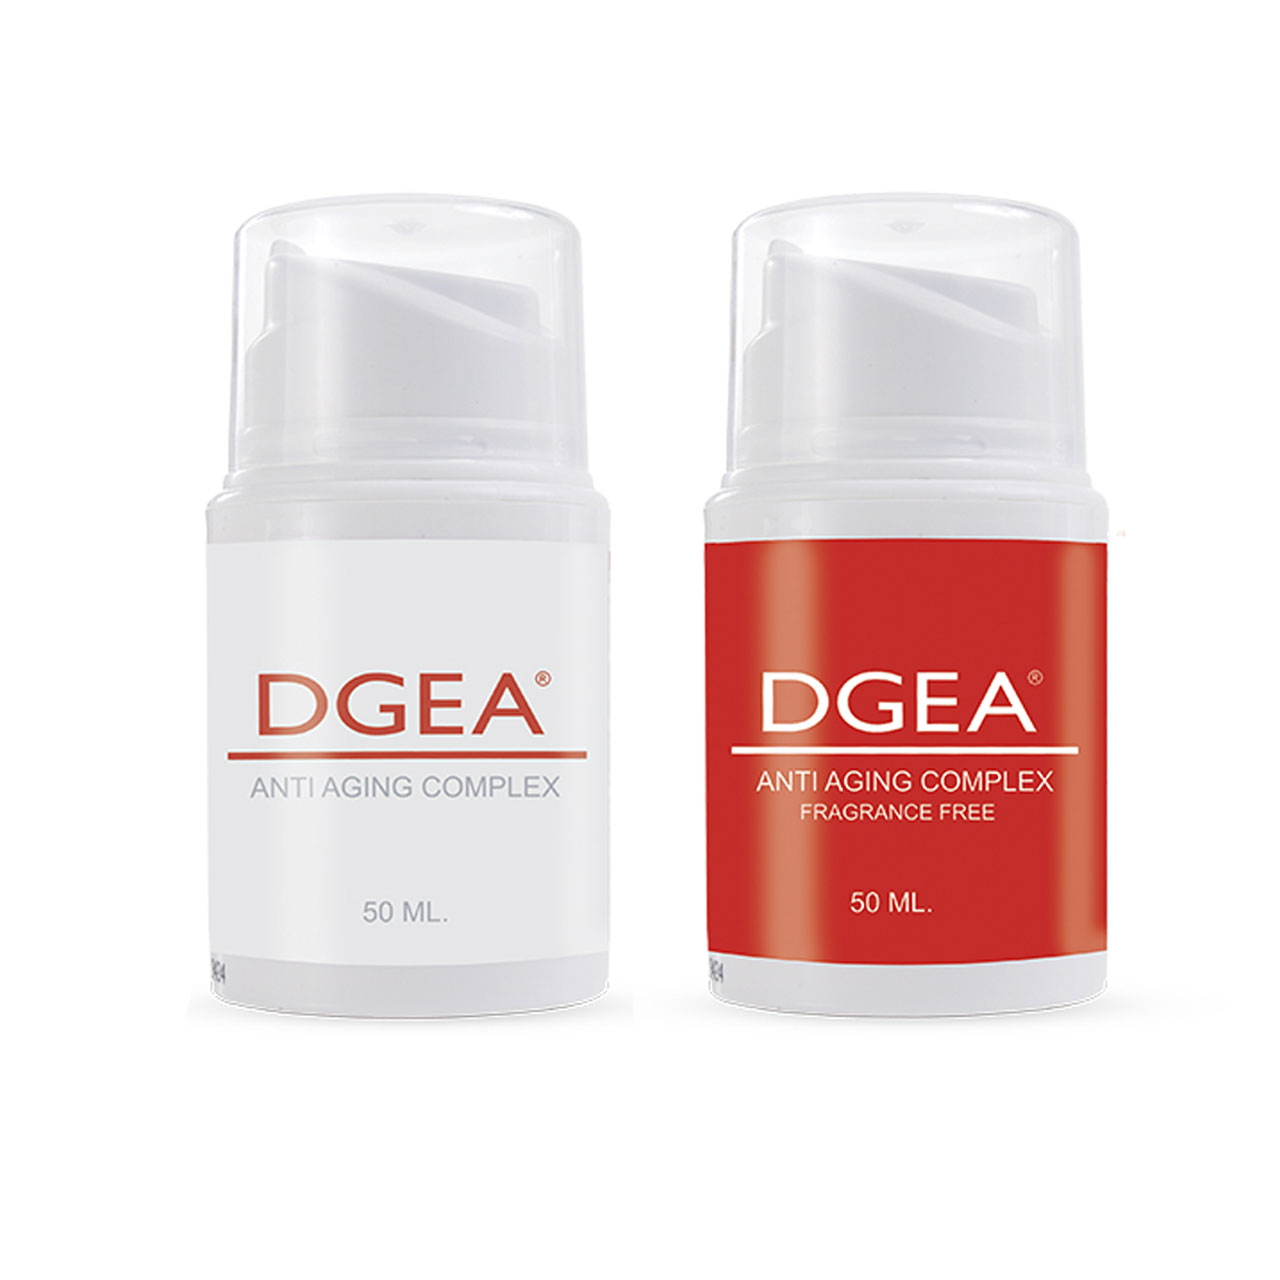 DGEA ® Anti Aging Complex 50 ml